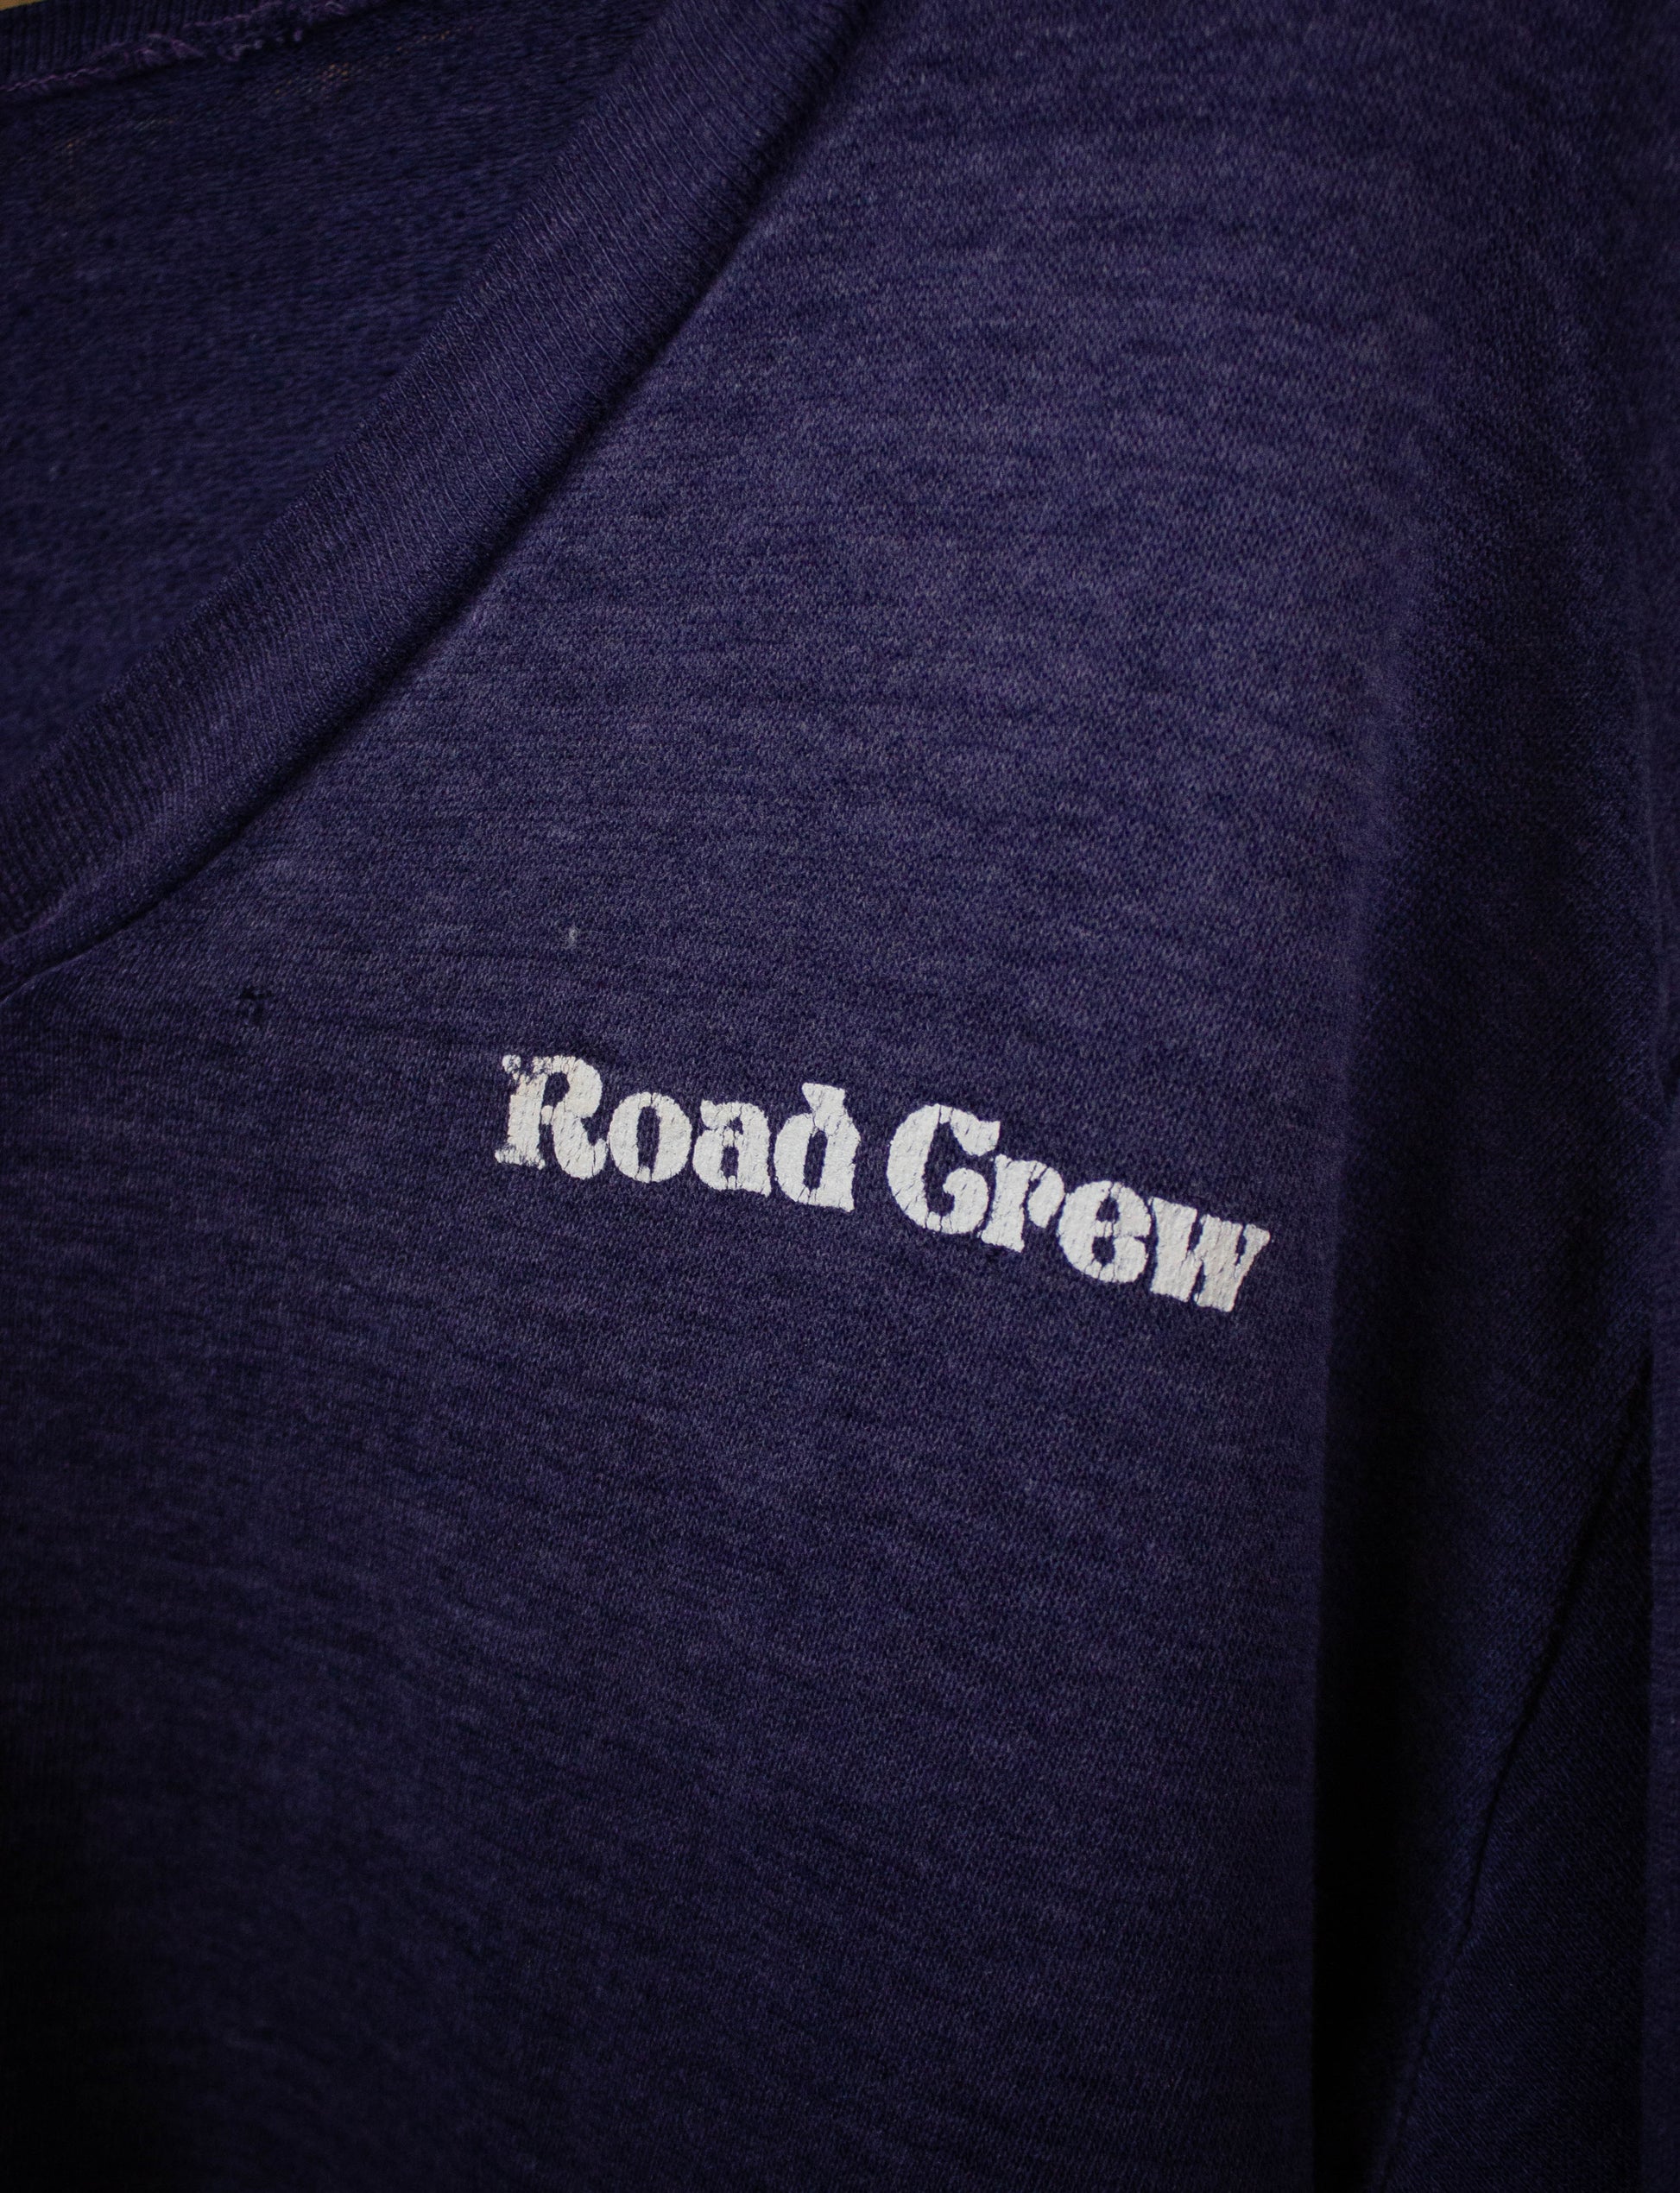 Vintage Grateful Dead Road Crew V Neck Sweatshirt 80s Blue Medium